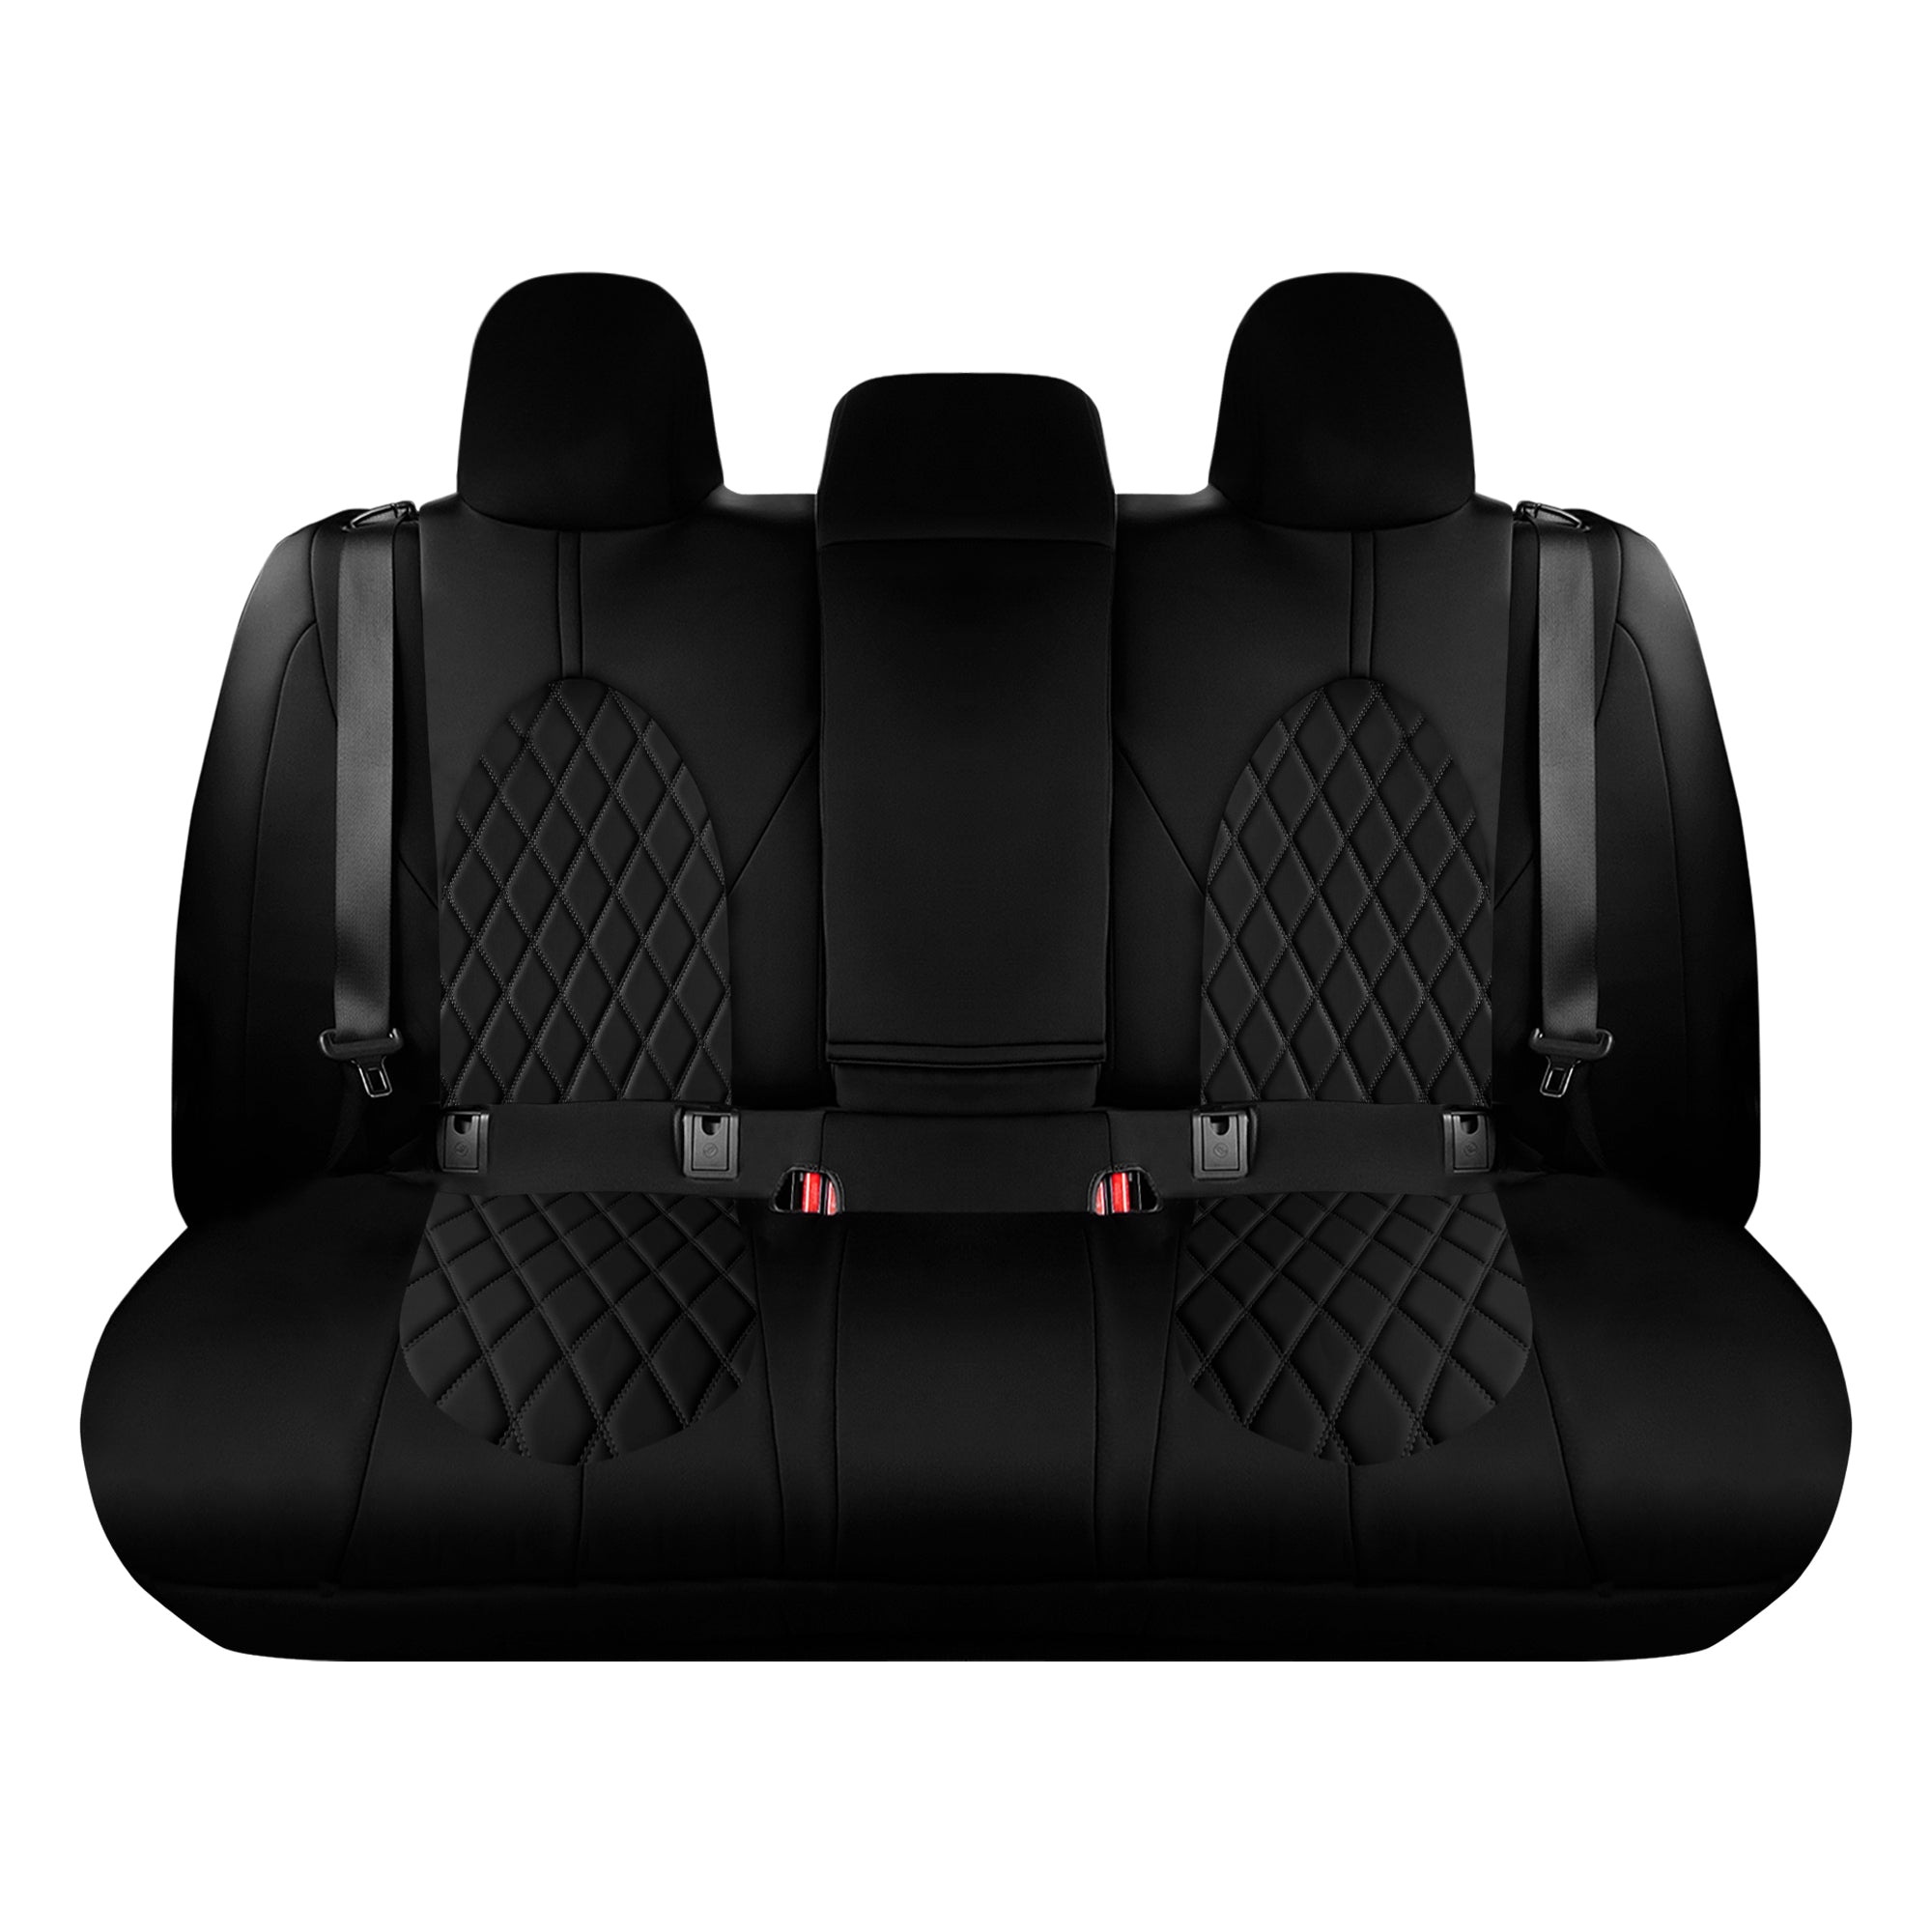 Toyota Camry  2018 - 2022  - Rear Set Seat Covers - Black Ultraflex Neoprene